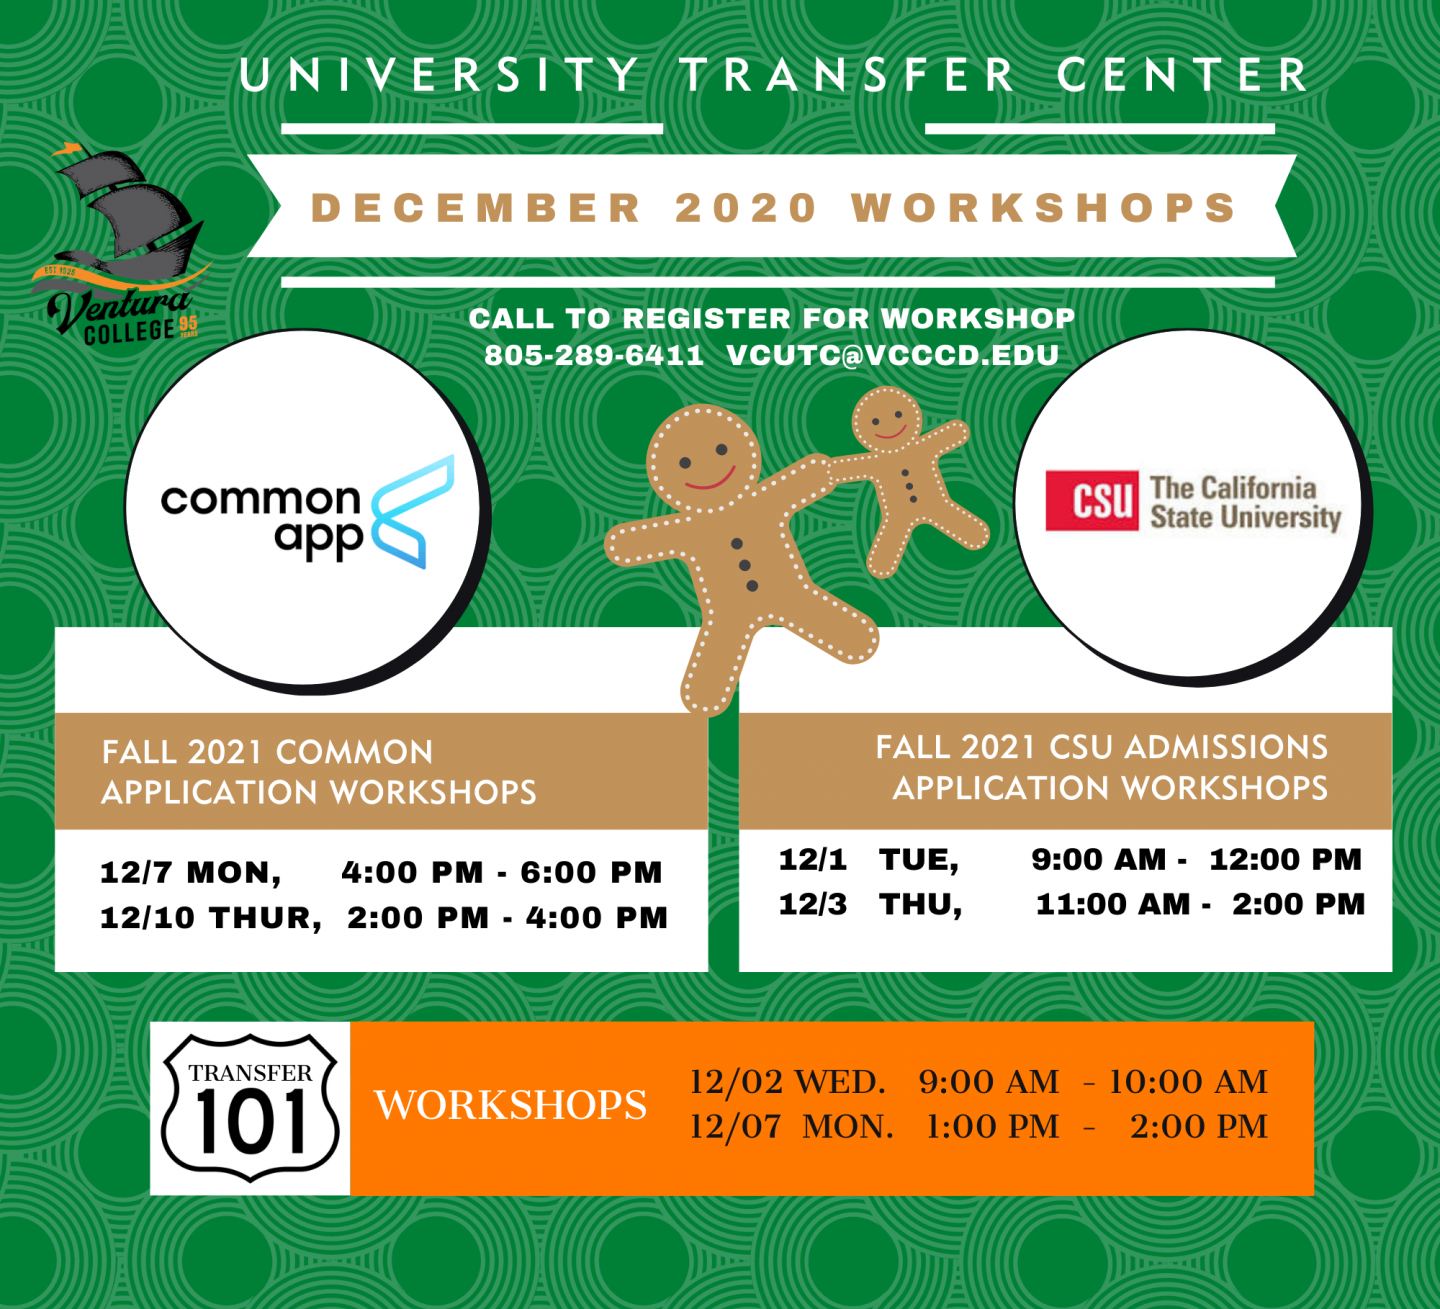 University Transfer Center December 2020 Workshops. Call to register for Workshop 805-289-6411 VCUTC@VCCCD.edu Workshop dates and times listed below.